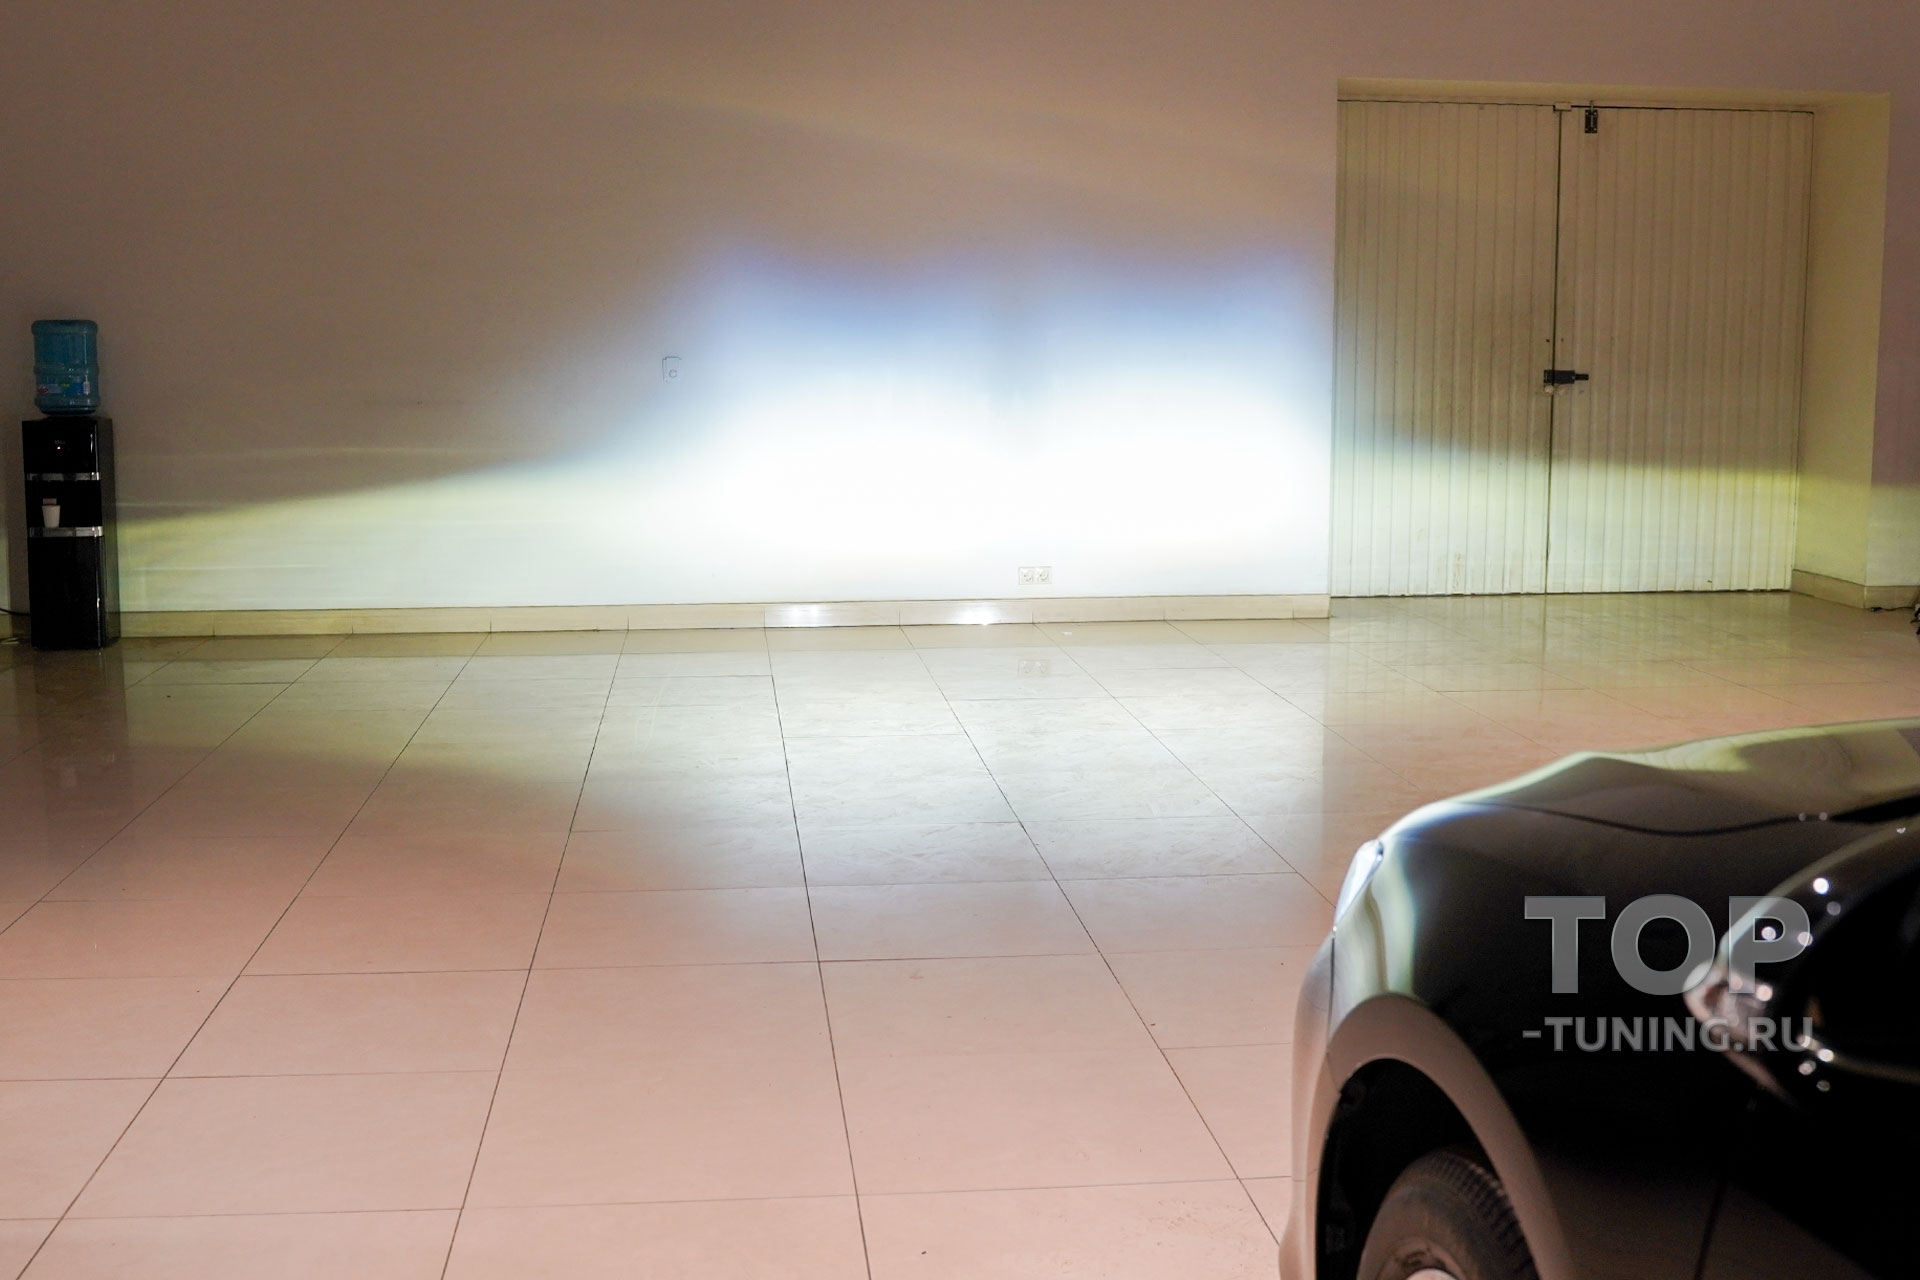 103620 Quadro Bi LED для Toyota Camry XV50